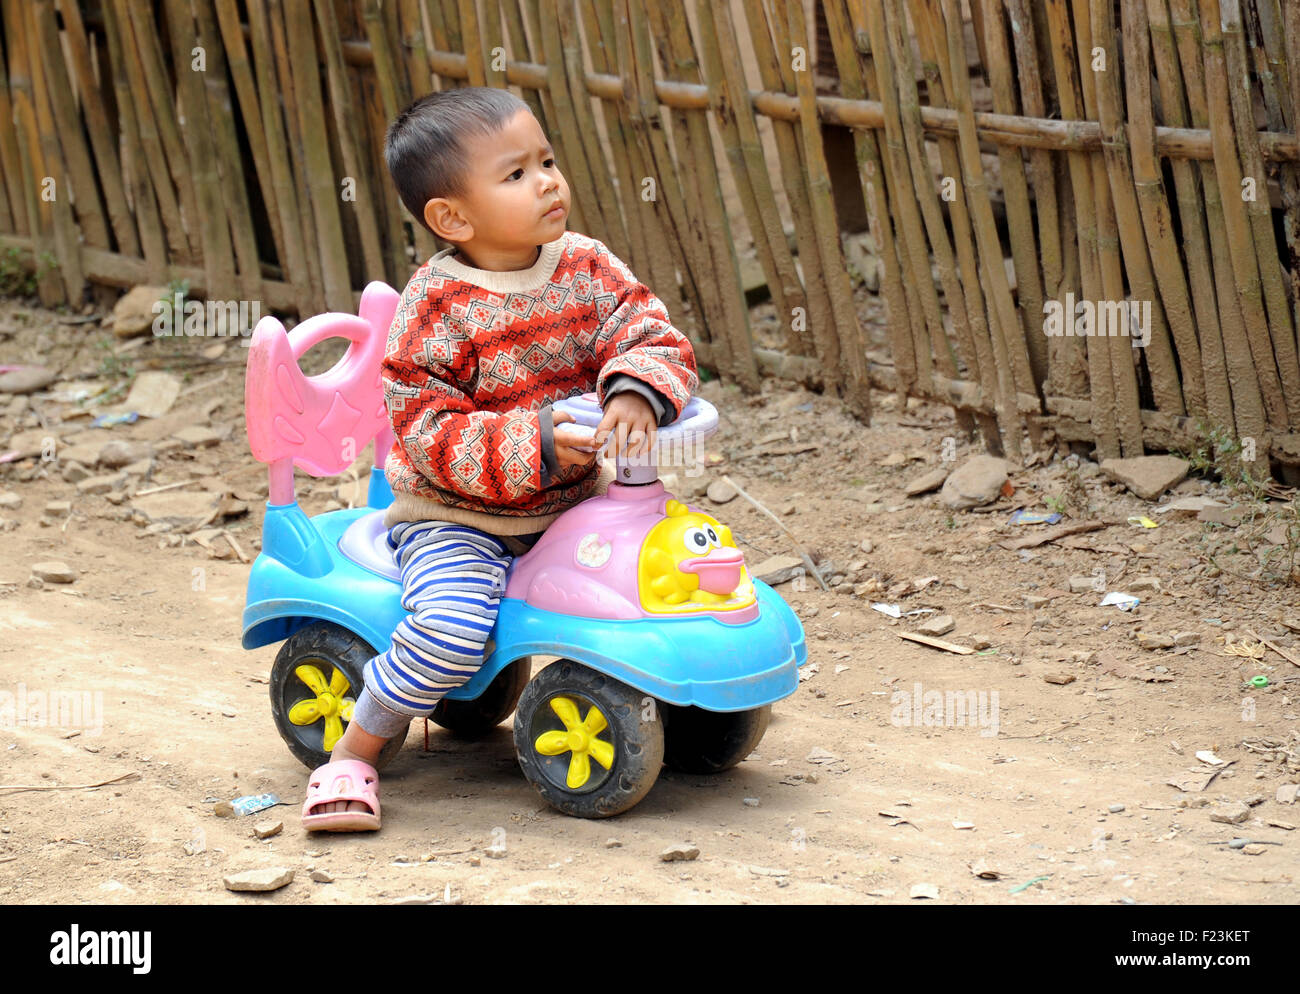 Boy on a plastic toy car, Luang Prabang, Laos Stock Photo